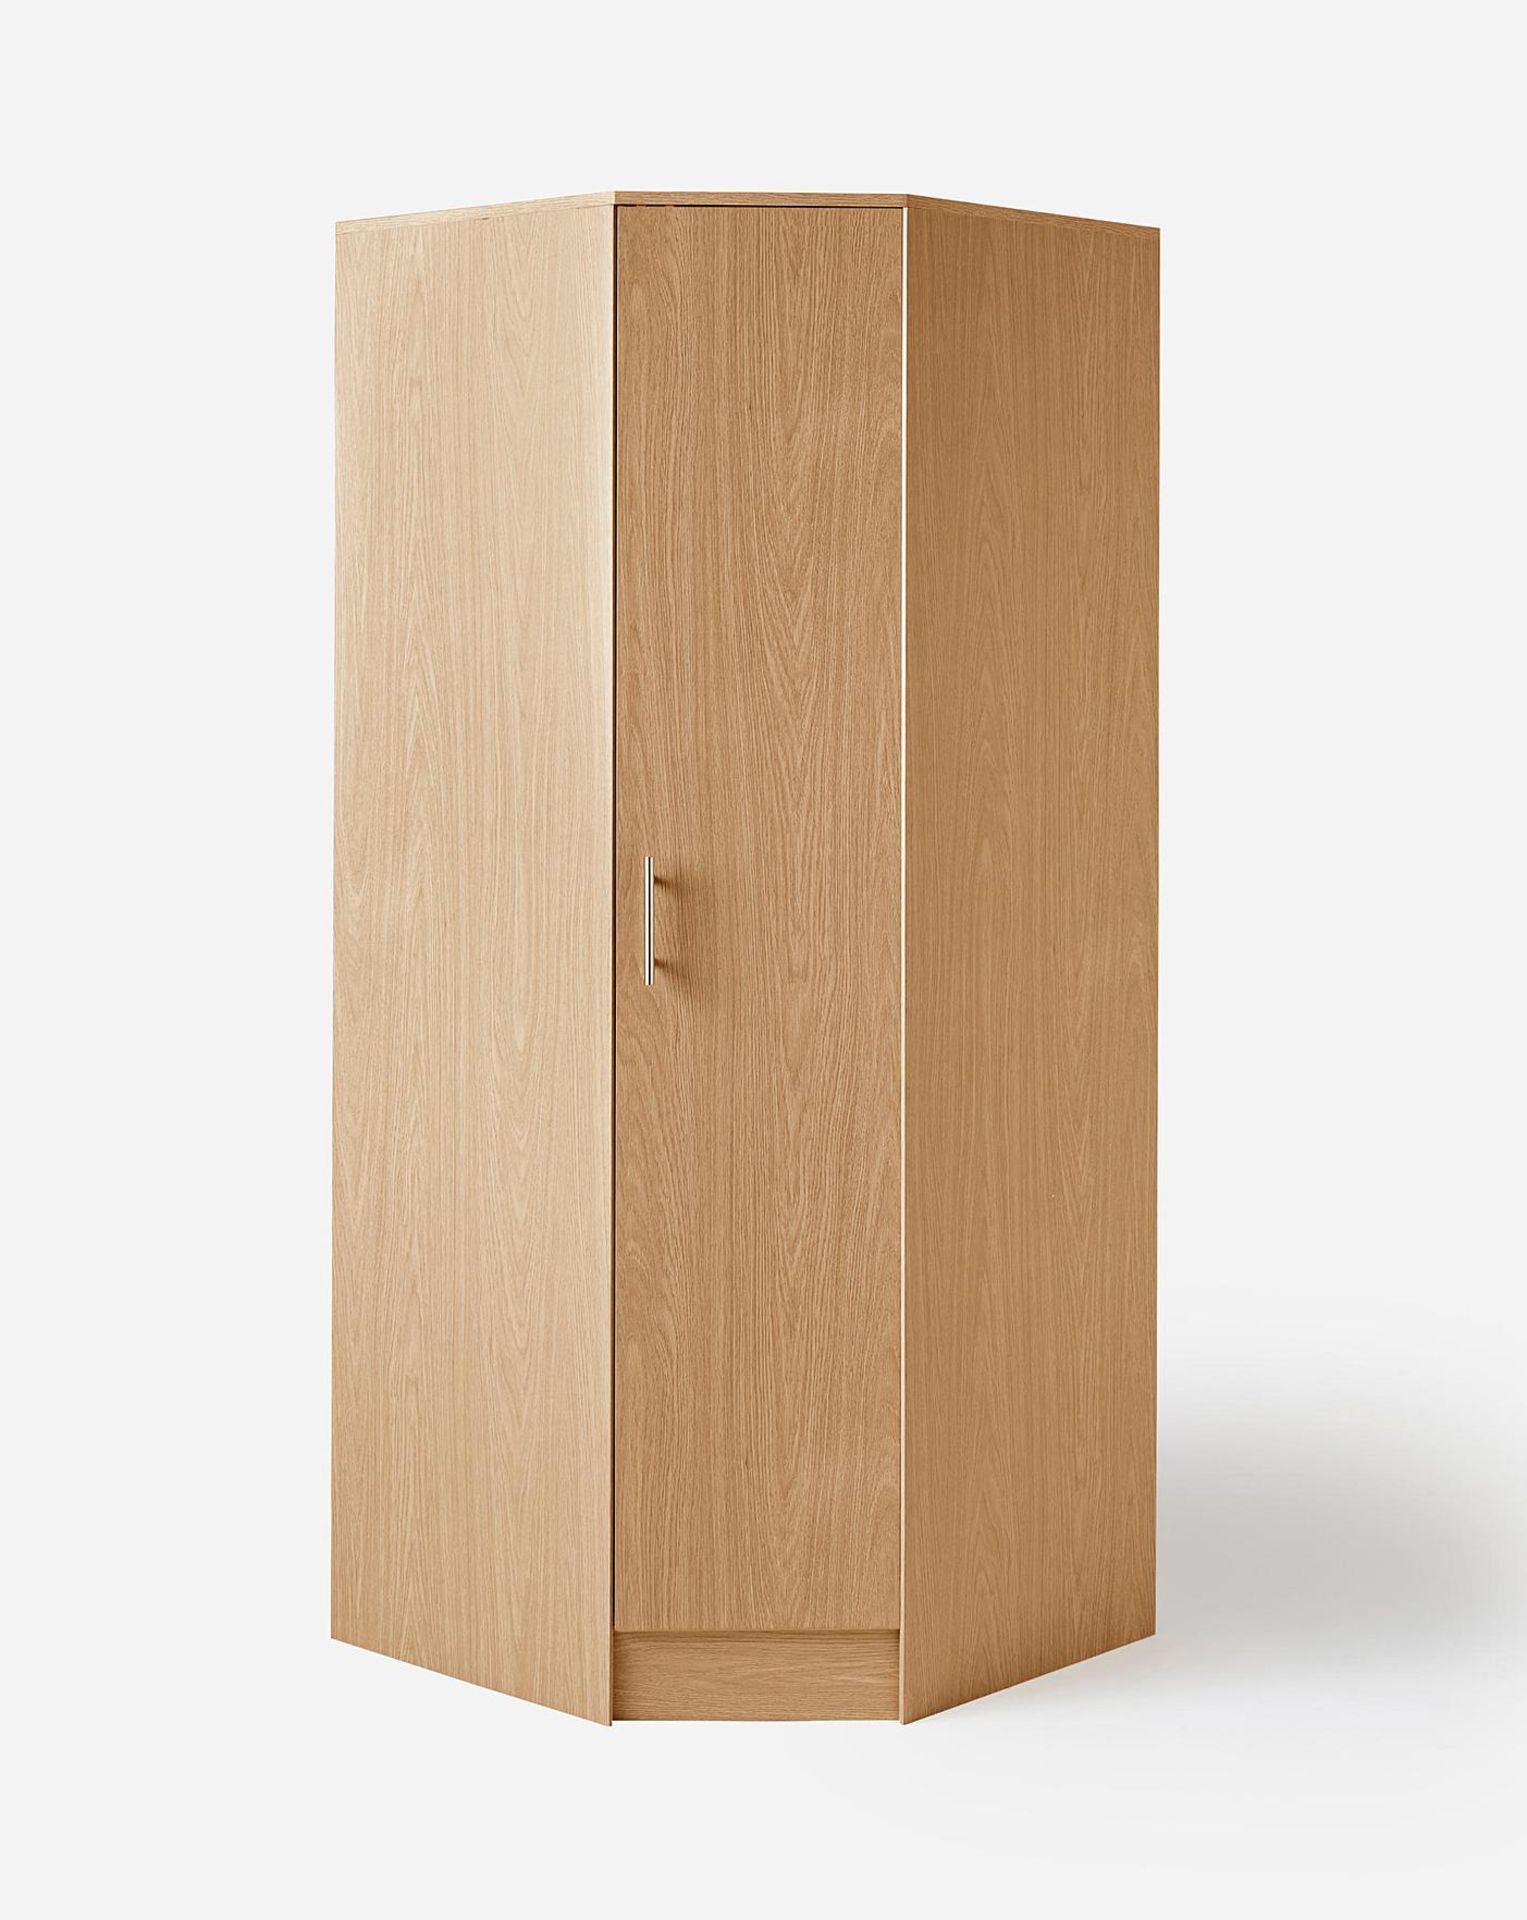 TRADE LOT 4 x NEW & BOXED DAKOTA Corner Wardrobe. OAK EFFECT. RRP £269 EACH. Part of At Home - Image 4 of 4